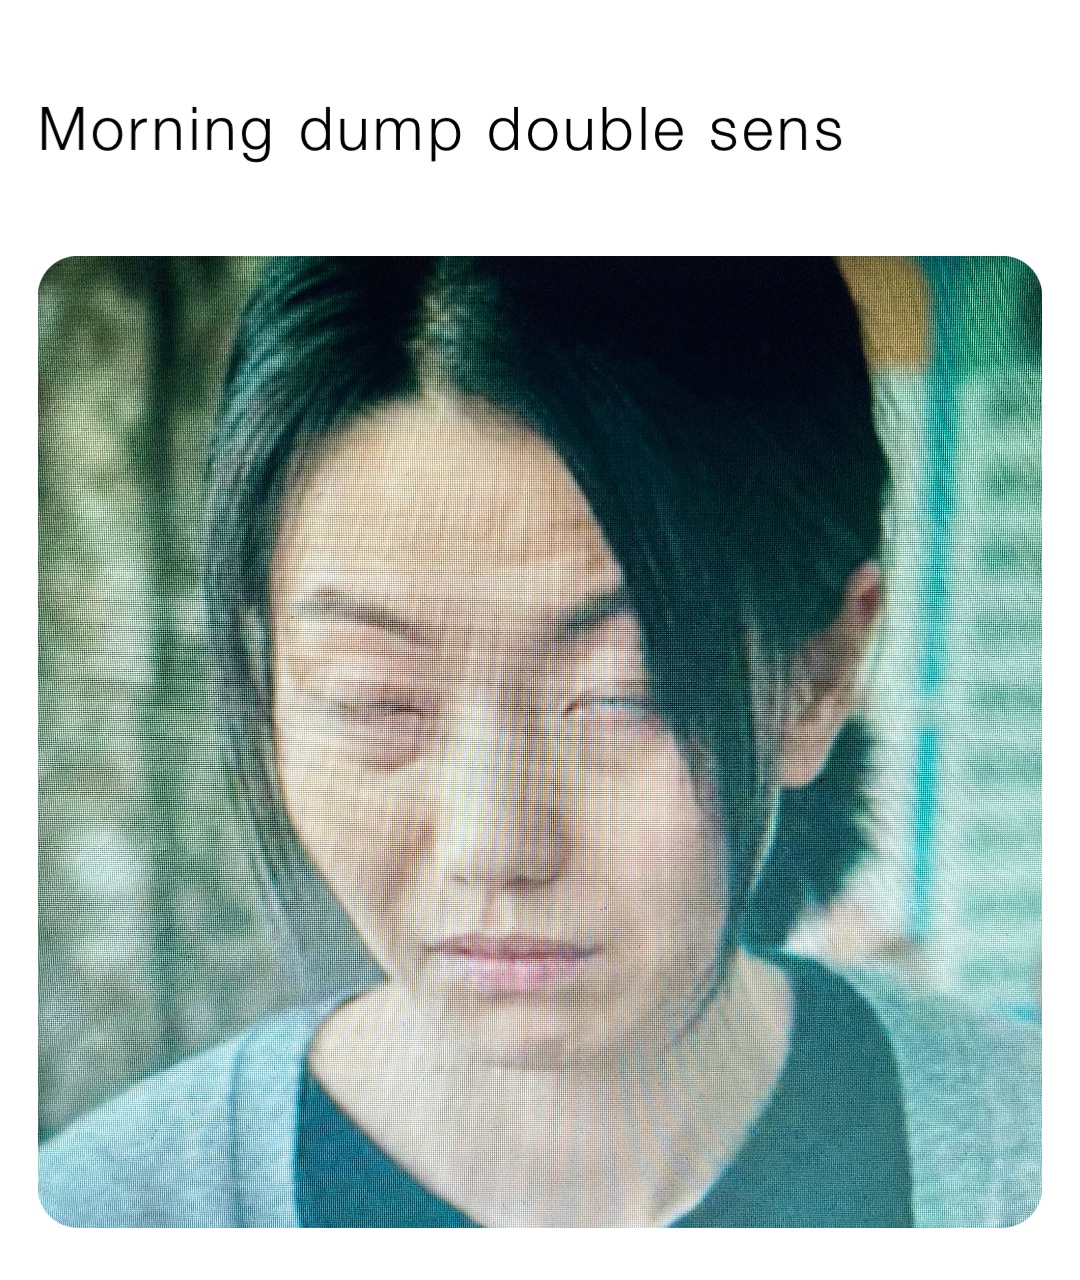 Morning dump double sens